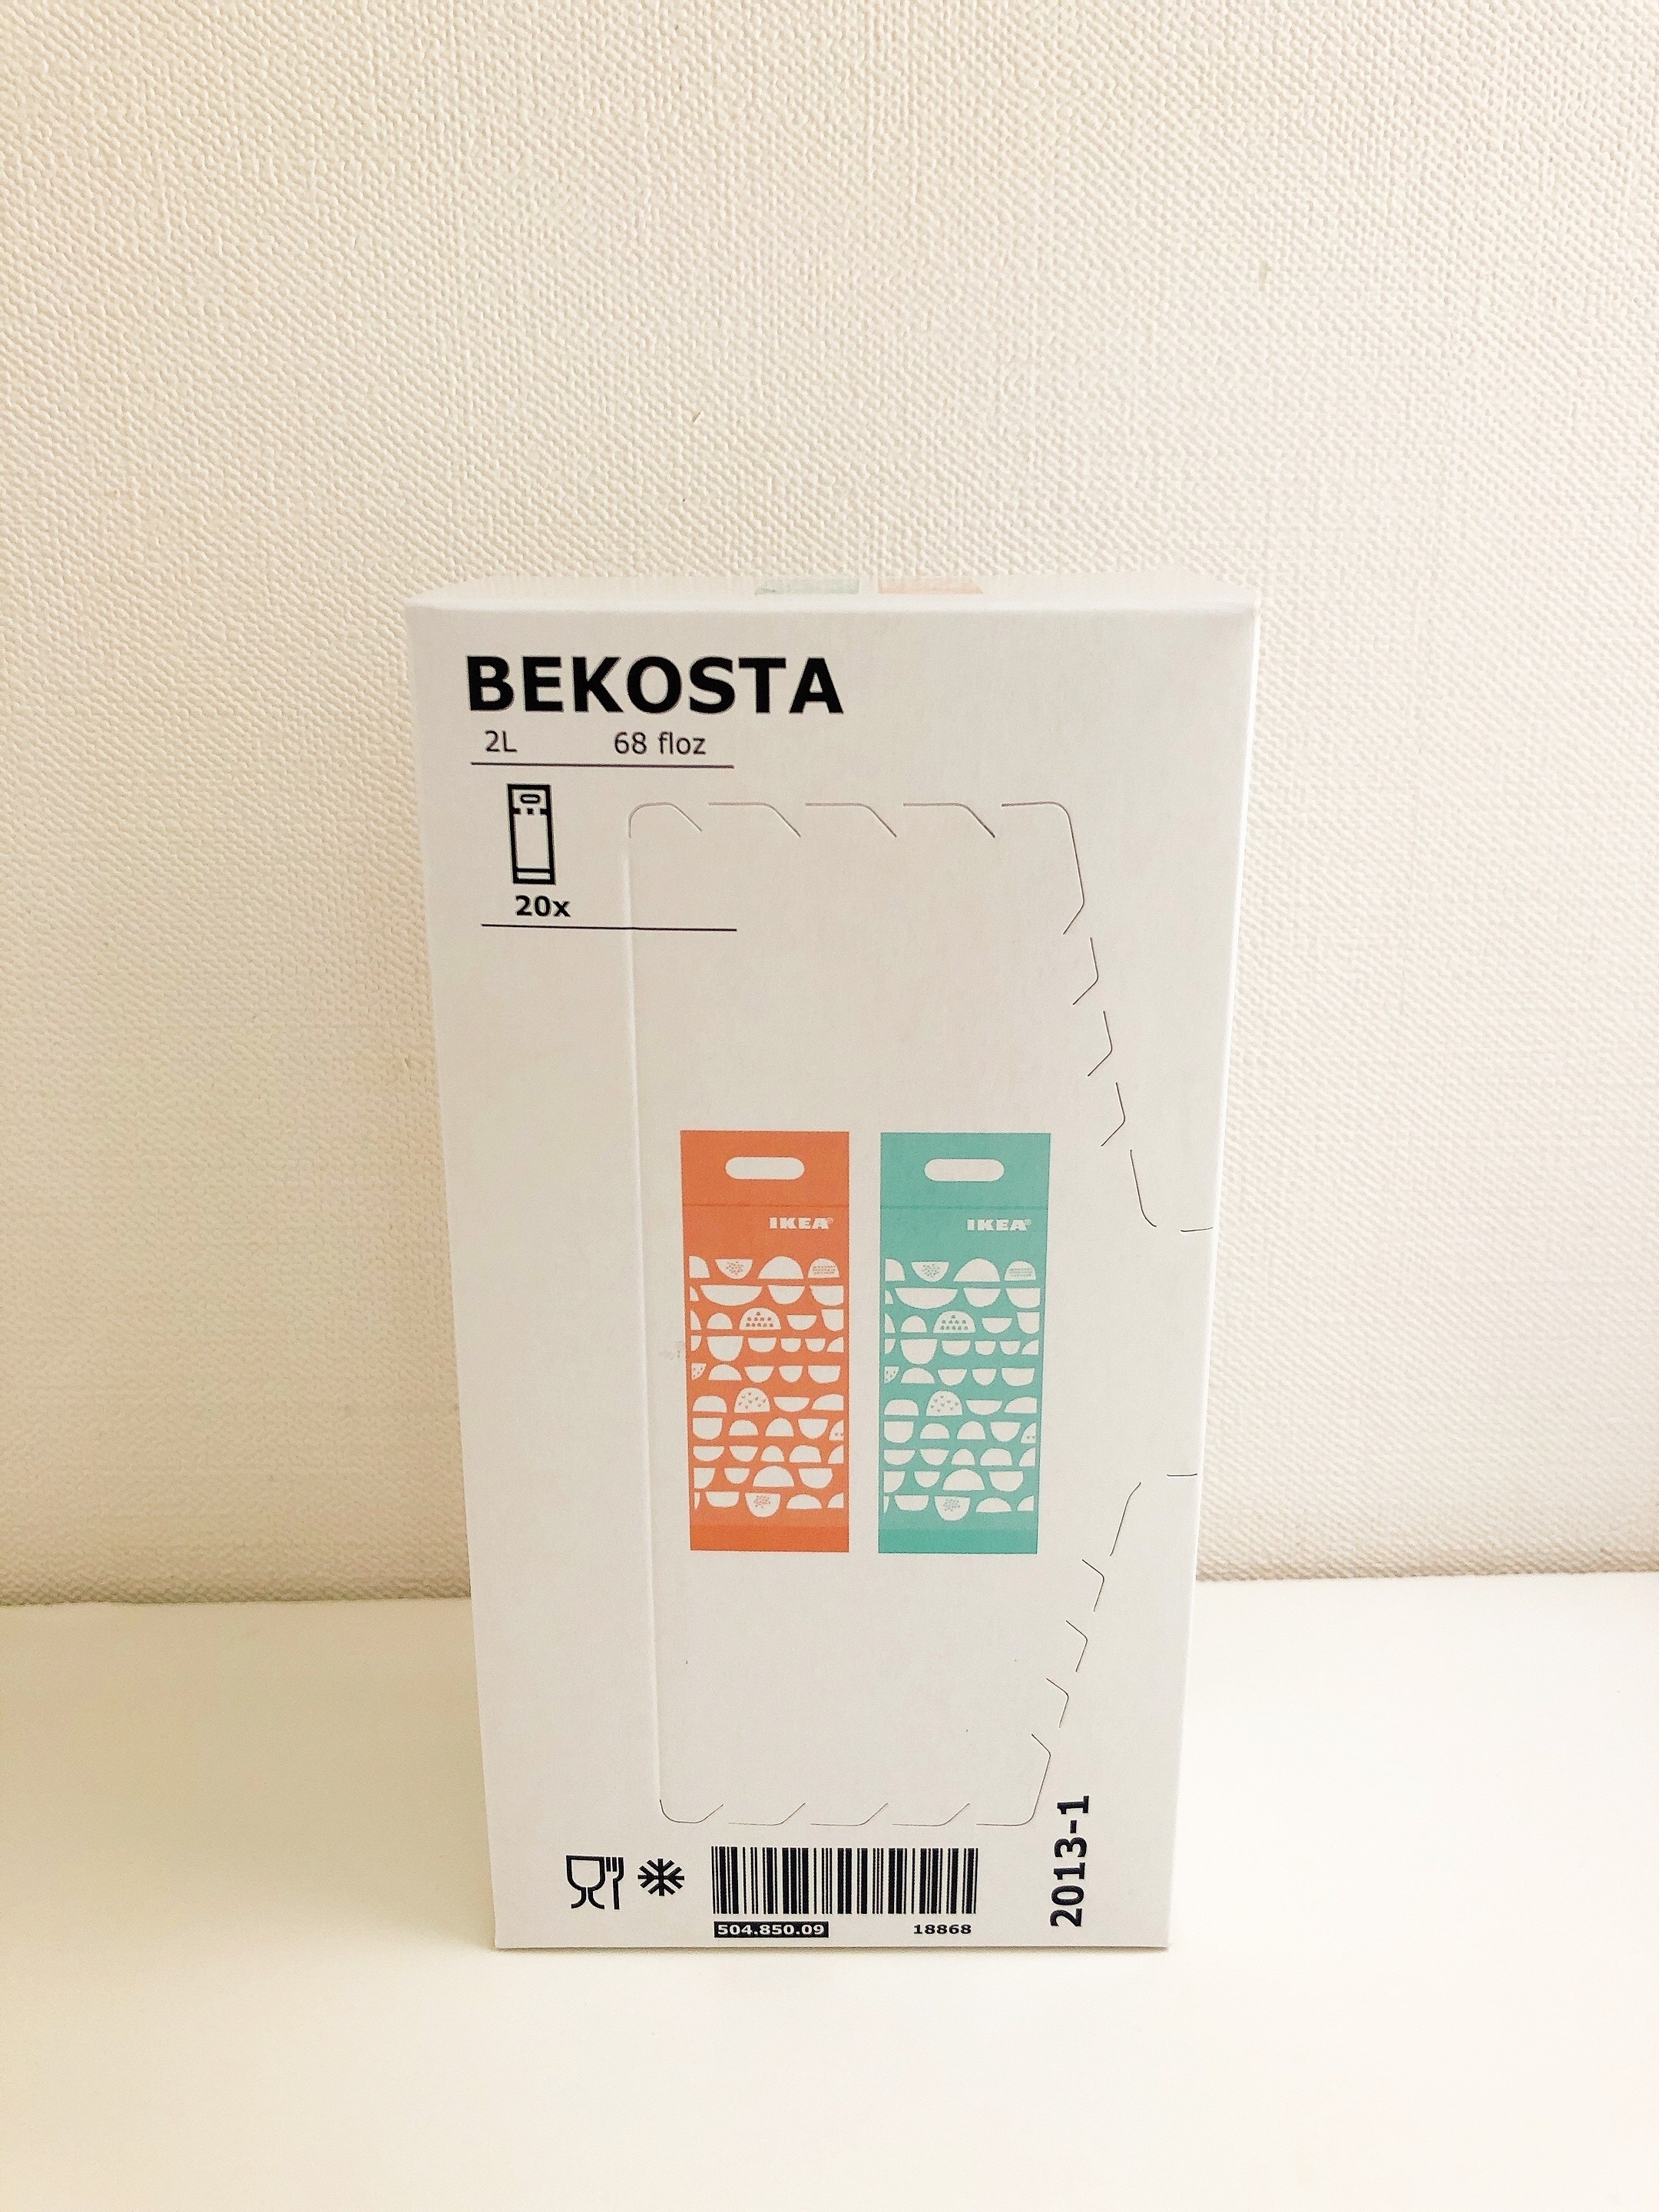 IKEA（イケア）の便利キッチン雑貨「BEKOSTA べコスタ フリーザーバッグ」